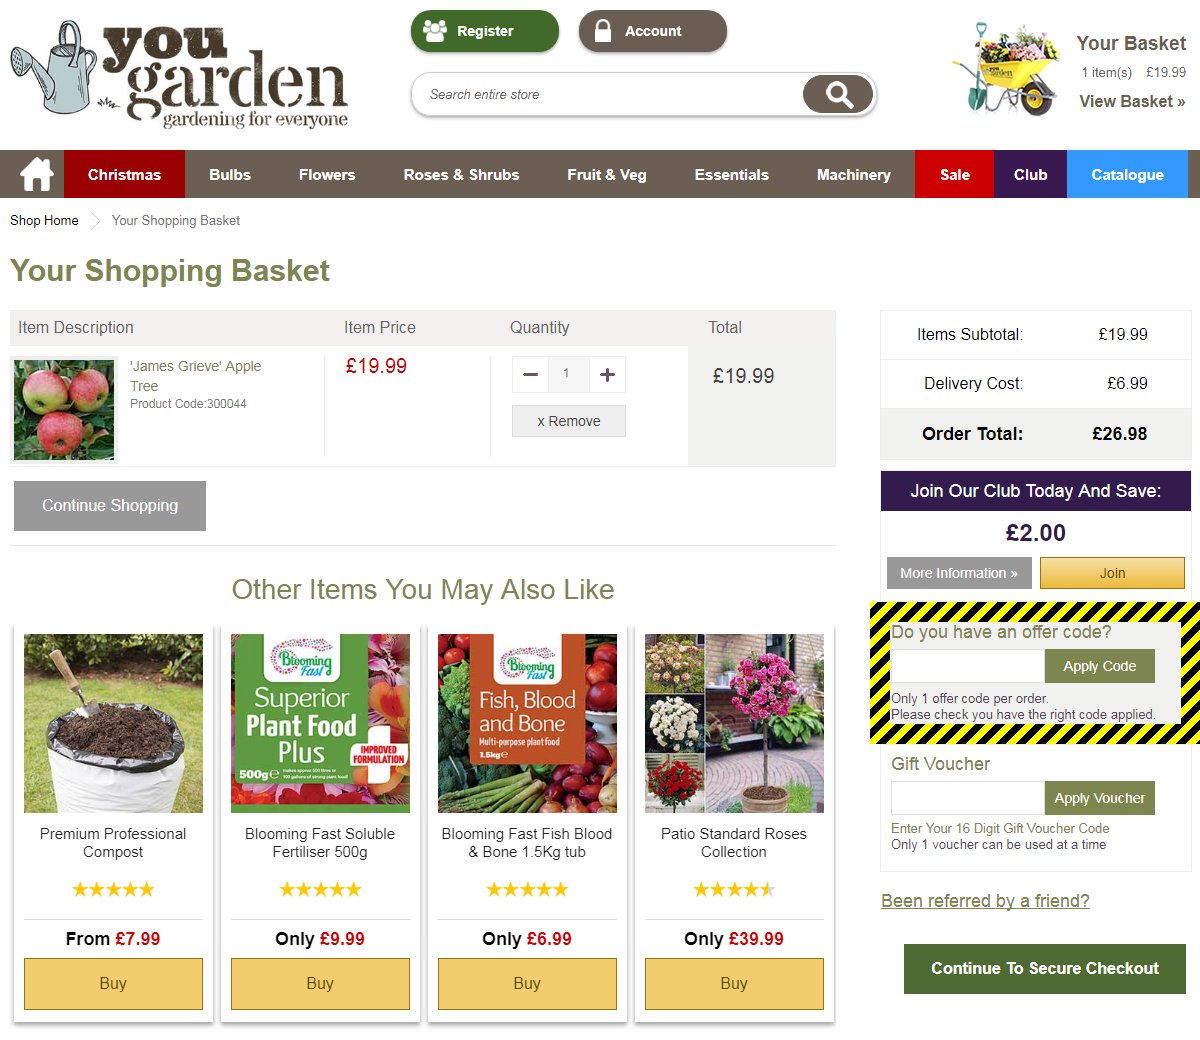 How to use a You Garden Discount Code